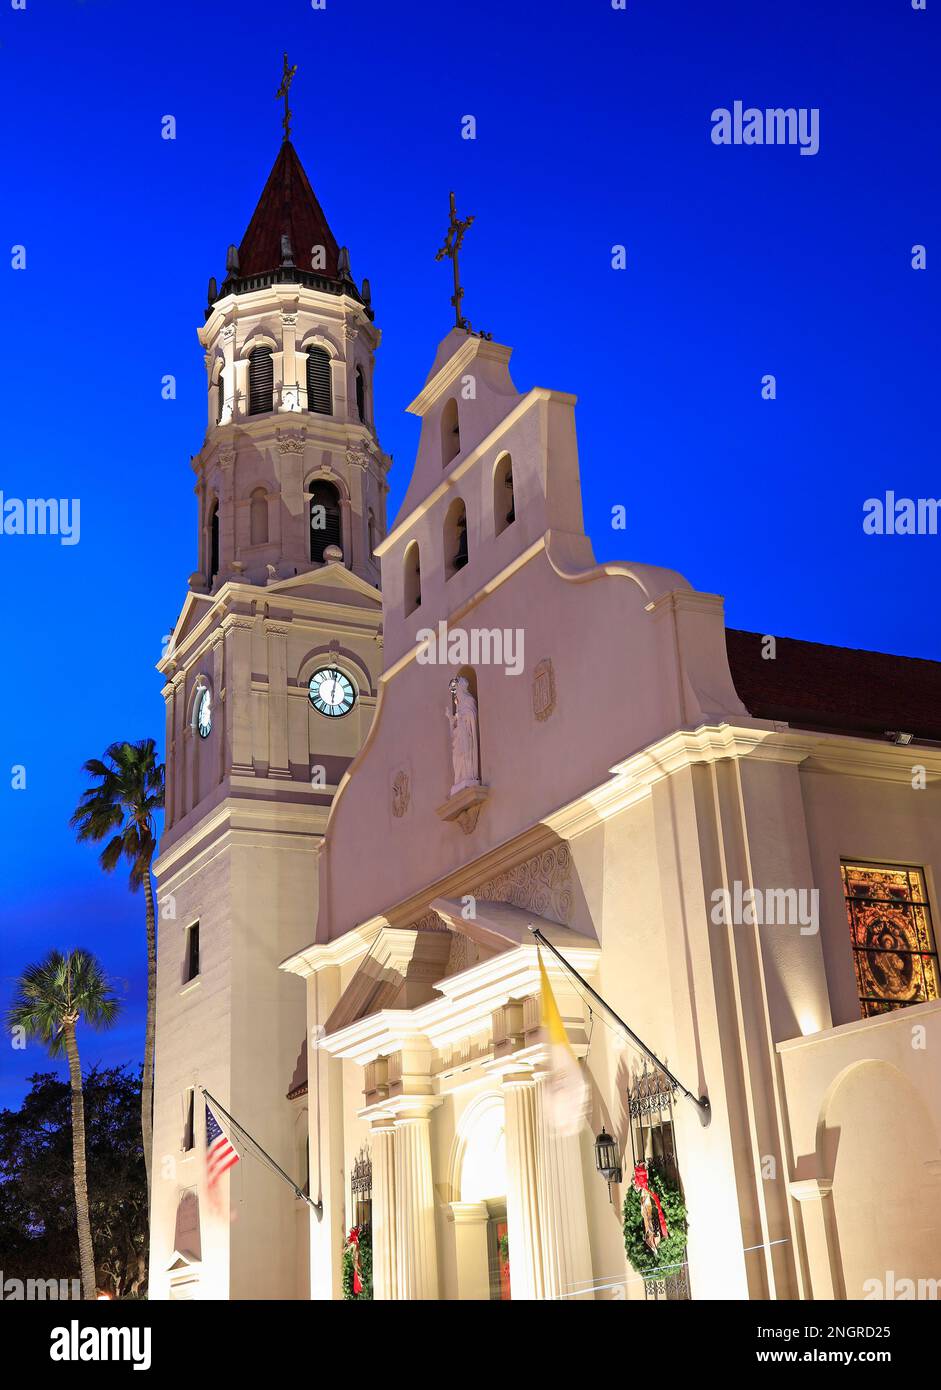 St. Augustine church illuminated at dusk in Florida, USA Stock Photo